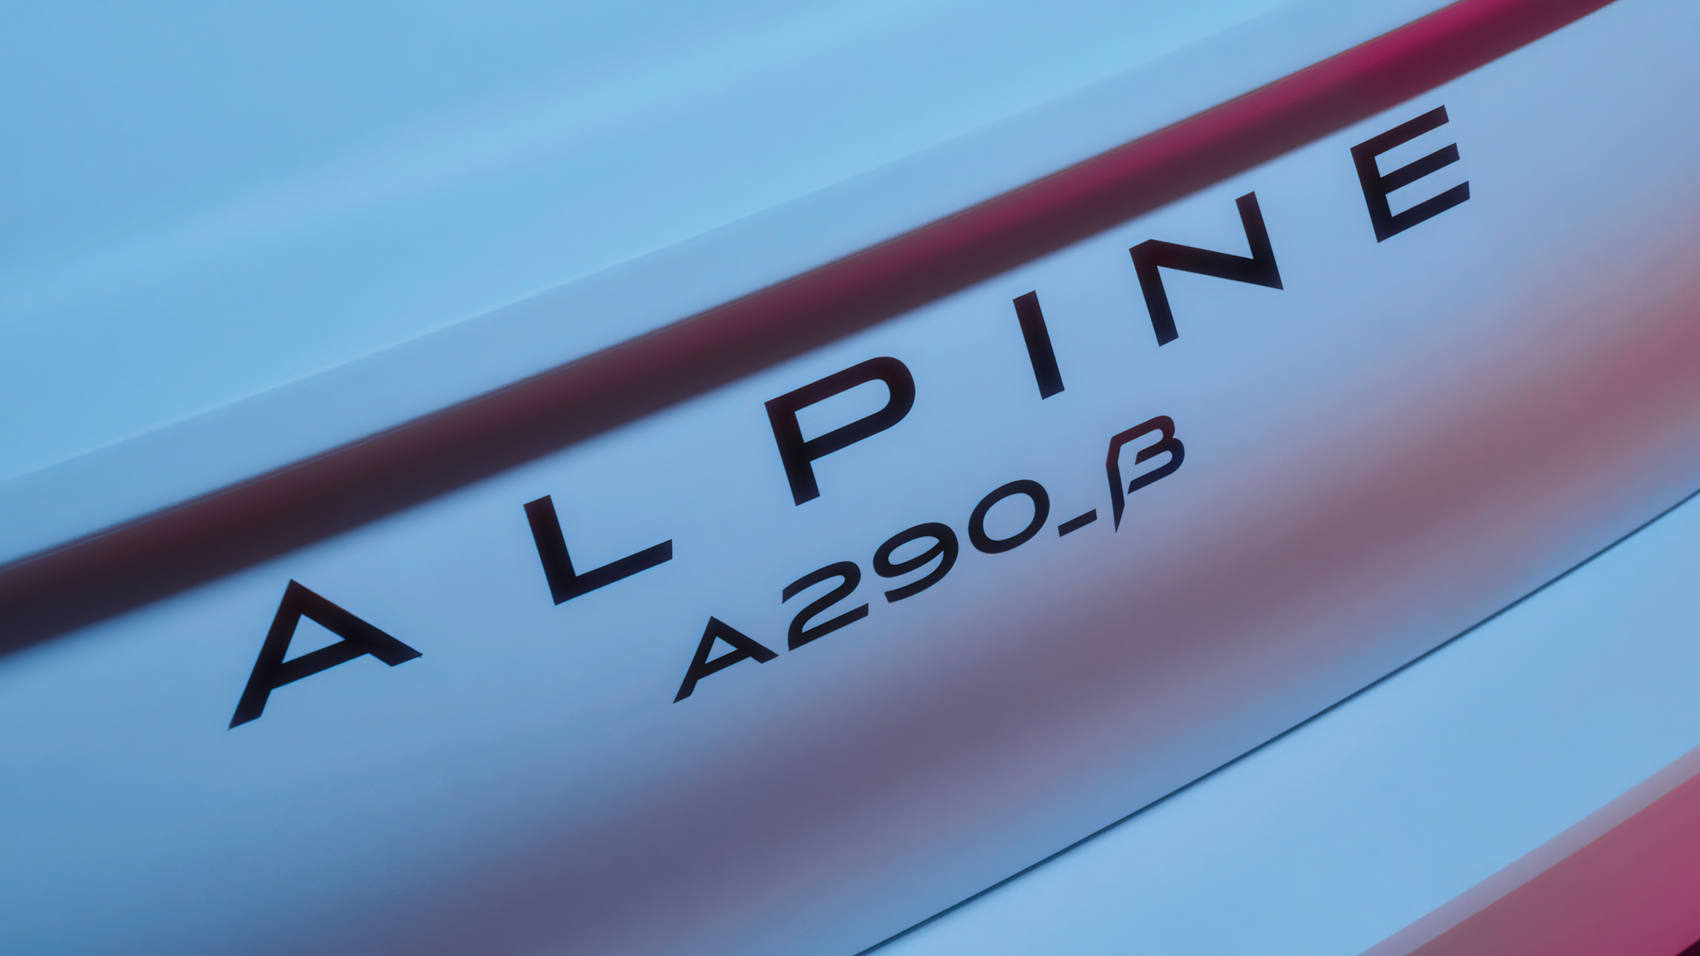 Alpine A290 teaser logo